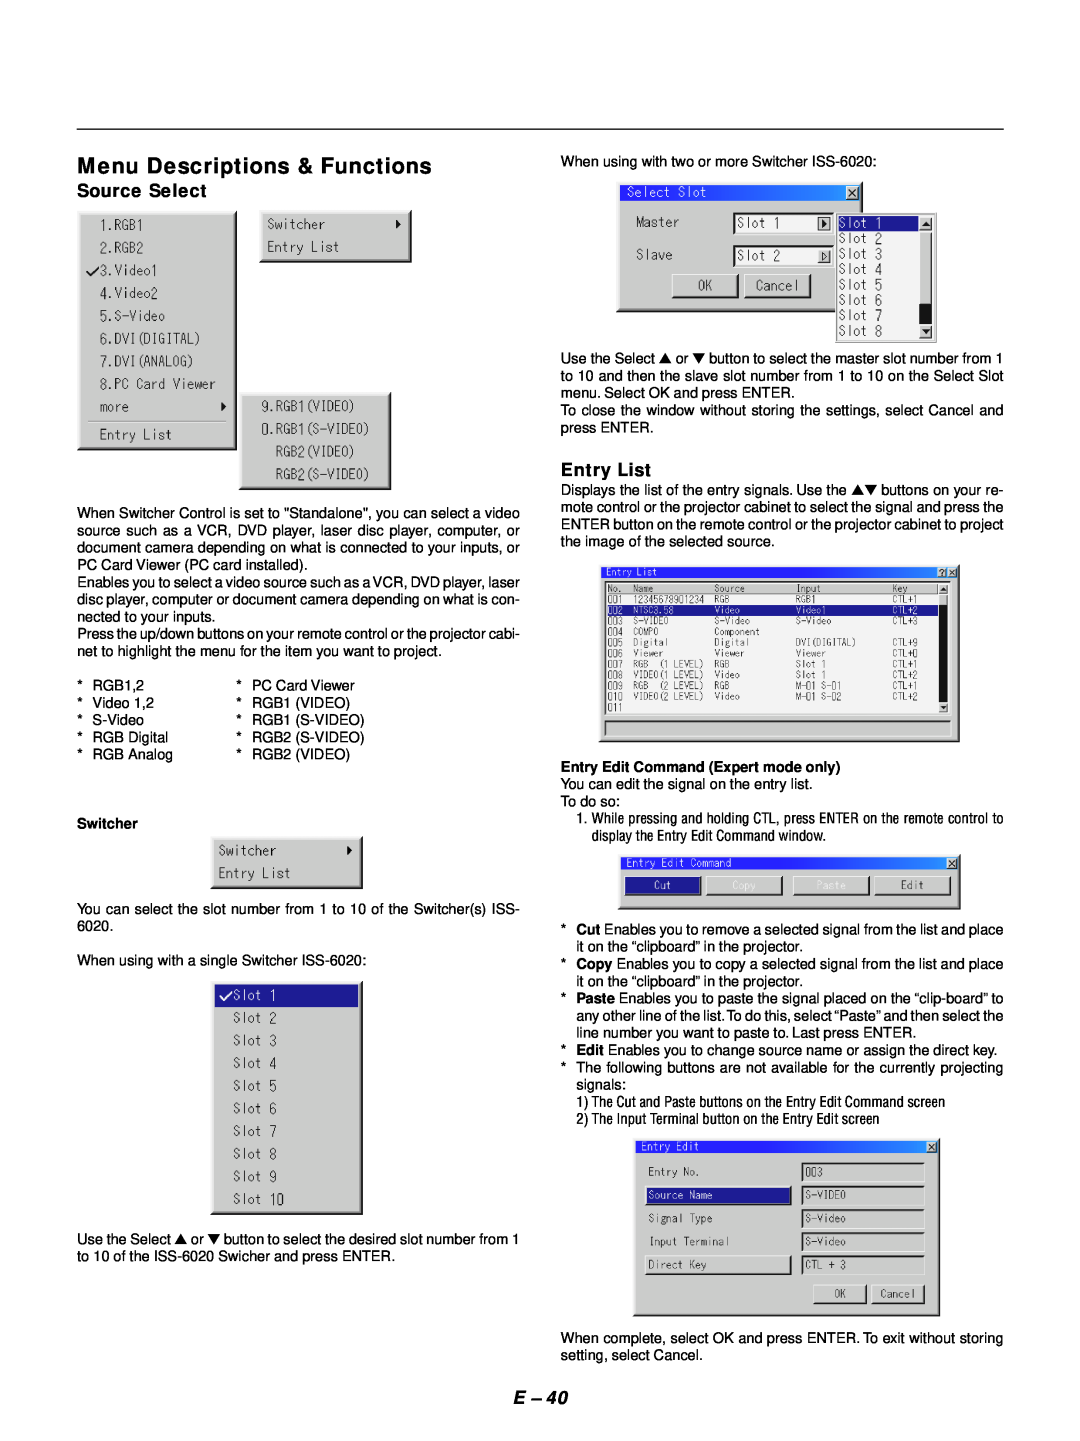 NEC GT1150 Menu Descriptions & Functions, Source Select, Entry List, Switcher, Entry Edit Command Expert mode only 